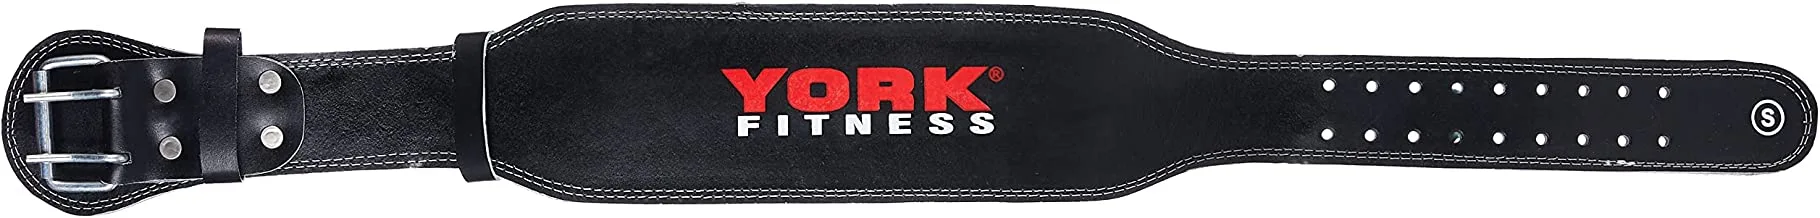 York Fitness 34